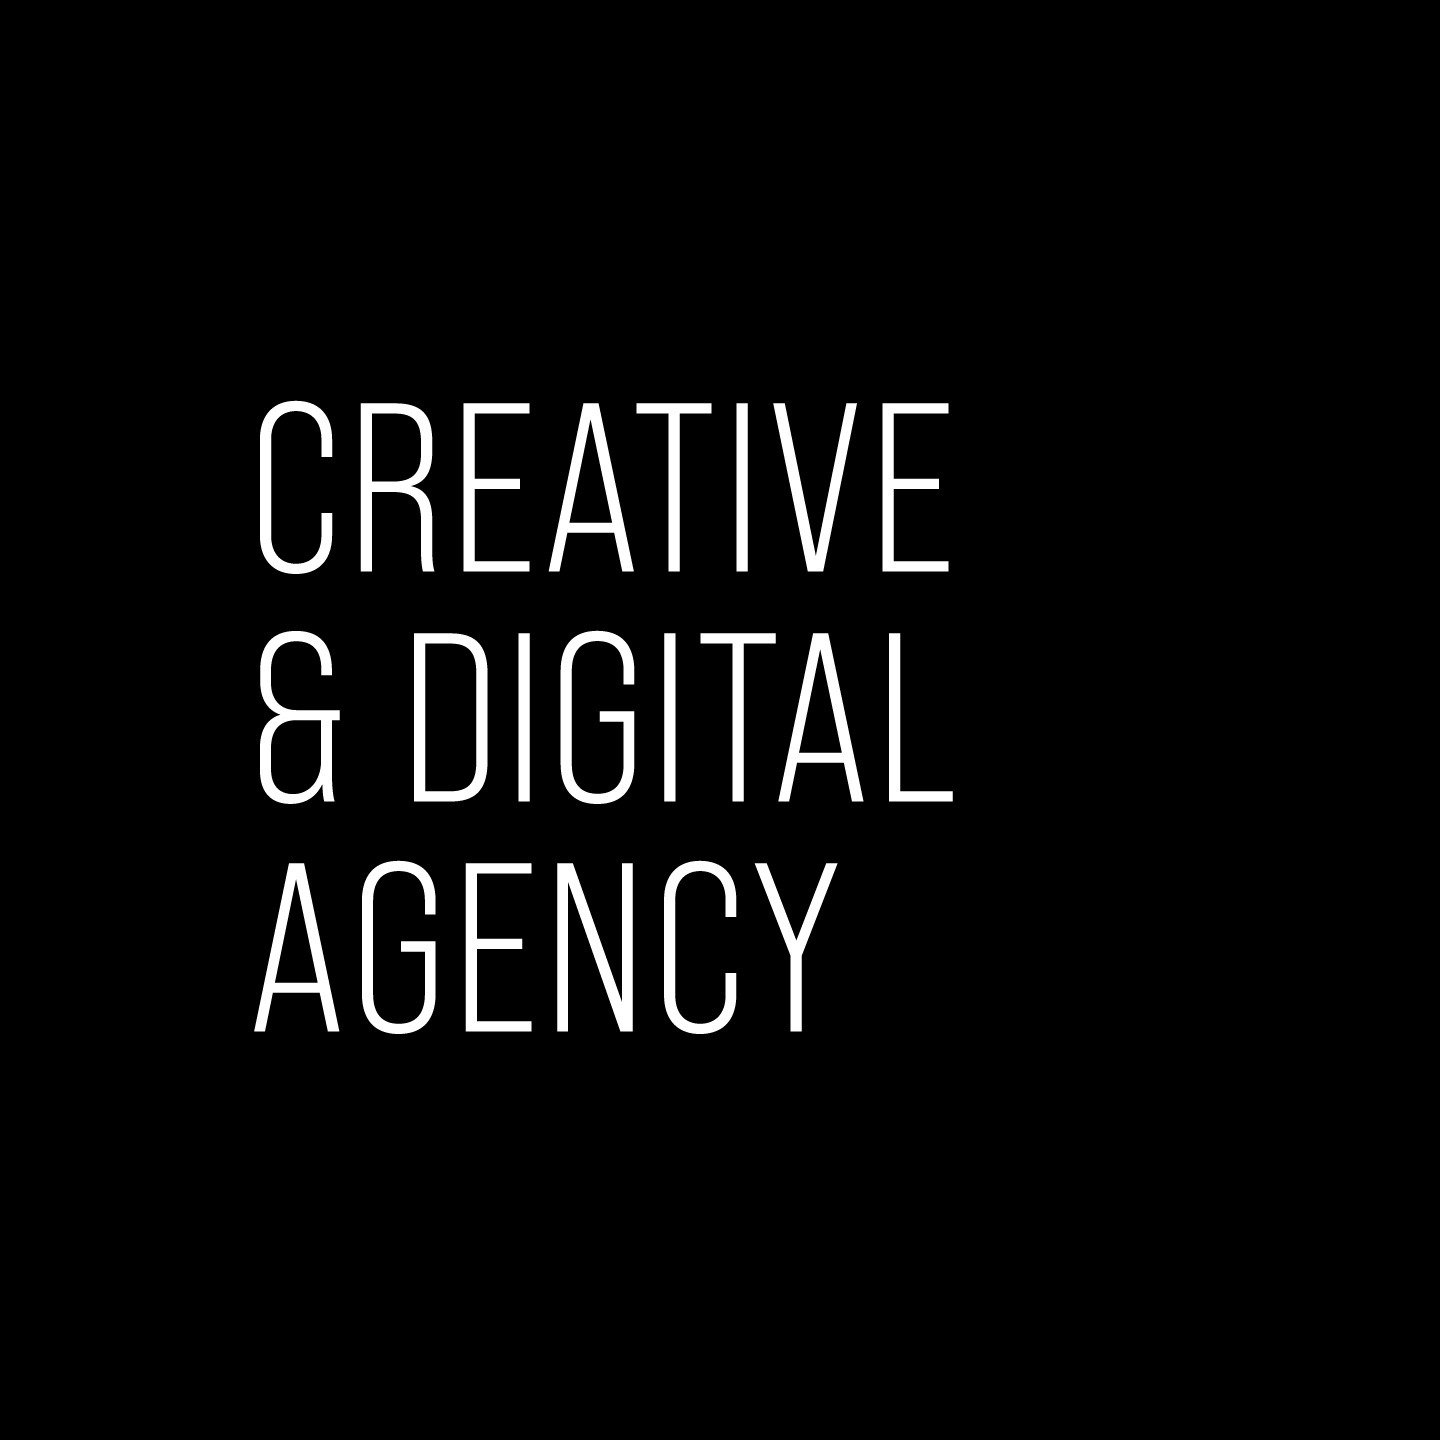 Brands with value.

#newings #creativity #digitalagency #branding #design #socialmedia #digitalcontents #strategy #website #ecommerce #animation #motion